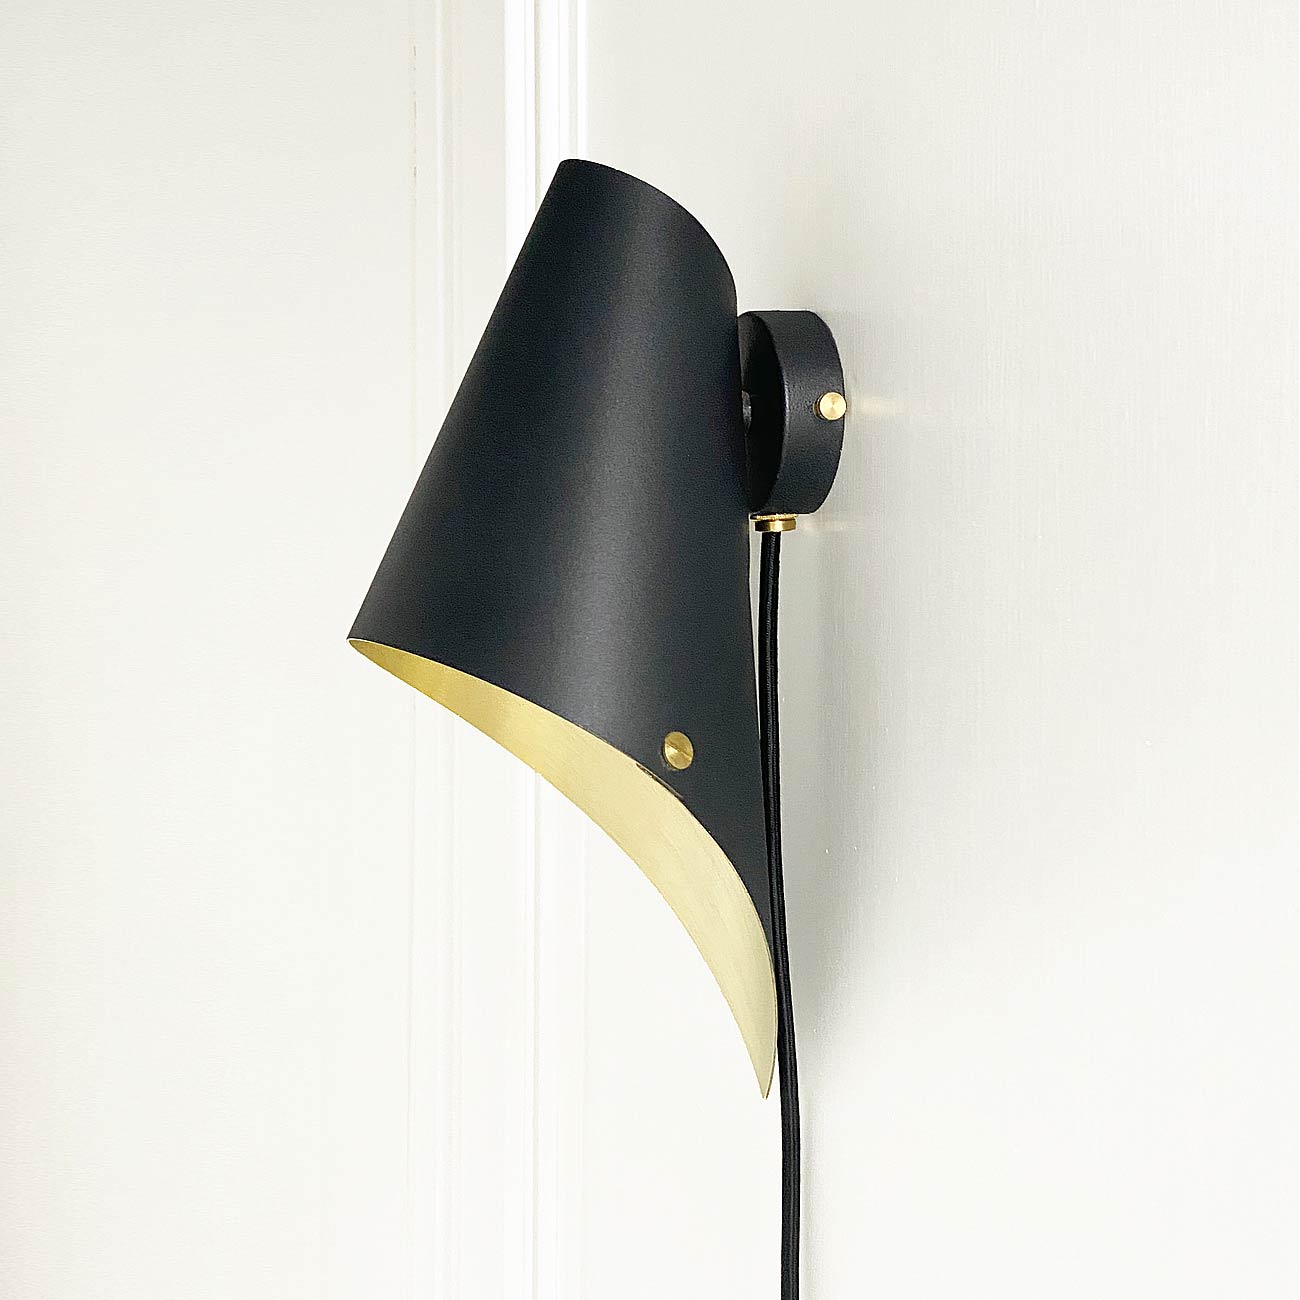 ARCFORM ARC Wall Light Plug In sold by Edinburgh-based South Charlotte Fine Lighting